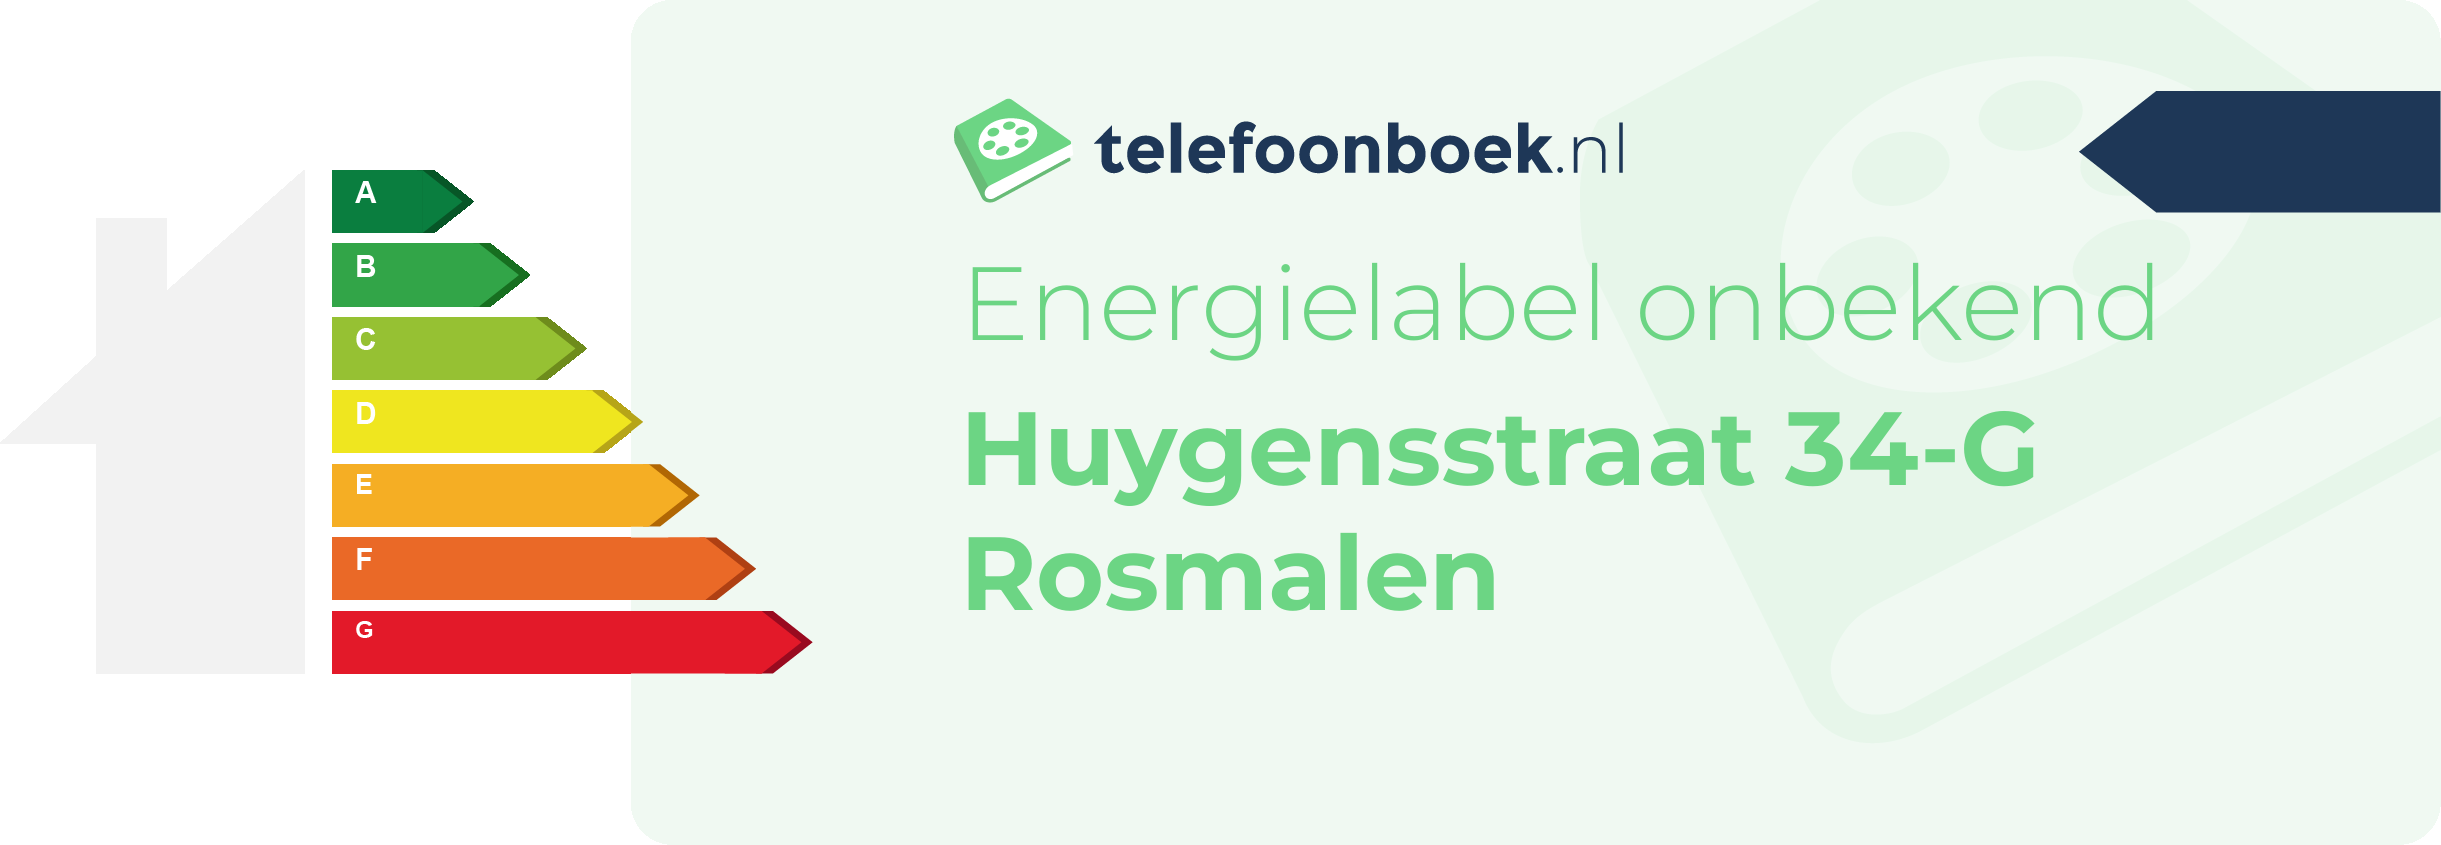 Energielabel Huygensstraat 34-G Rosmalen